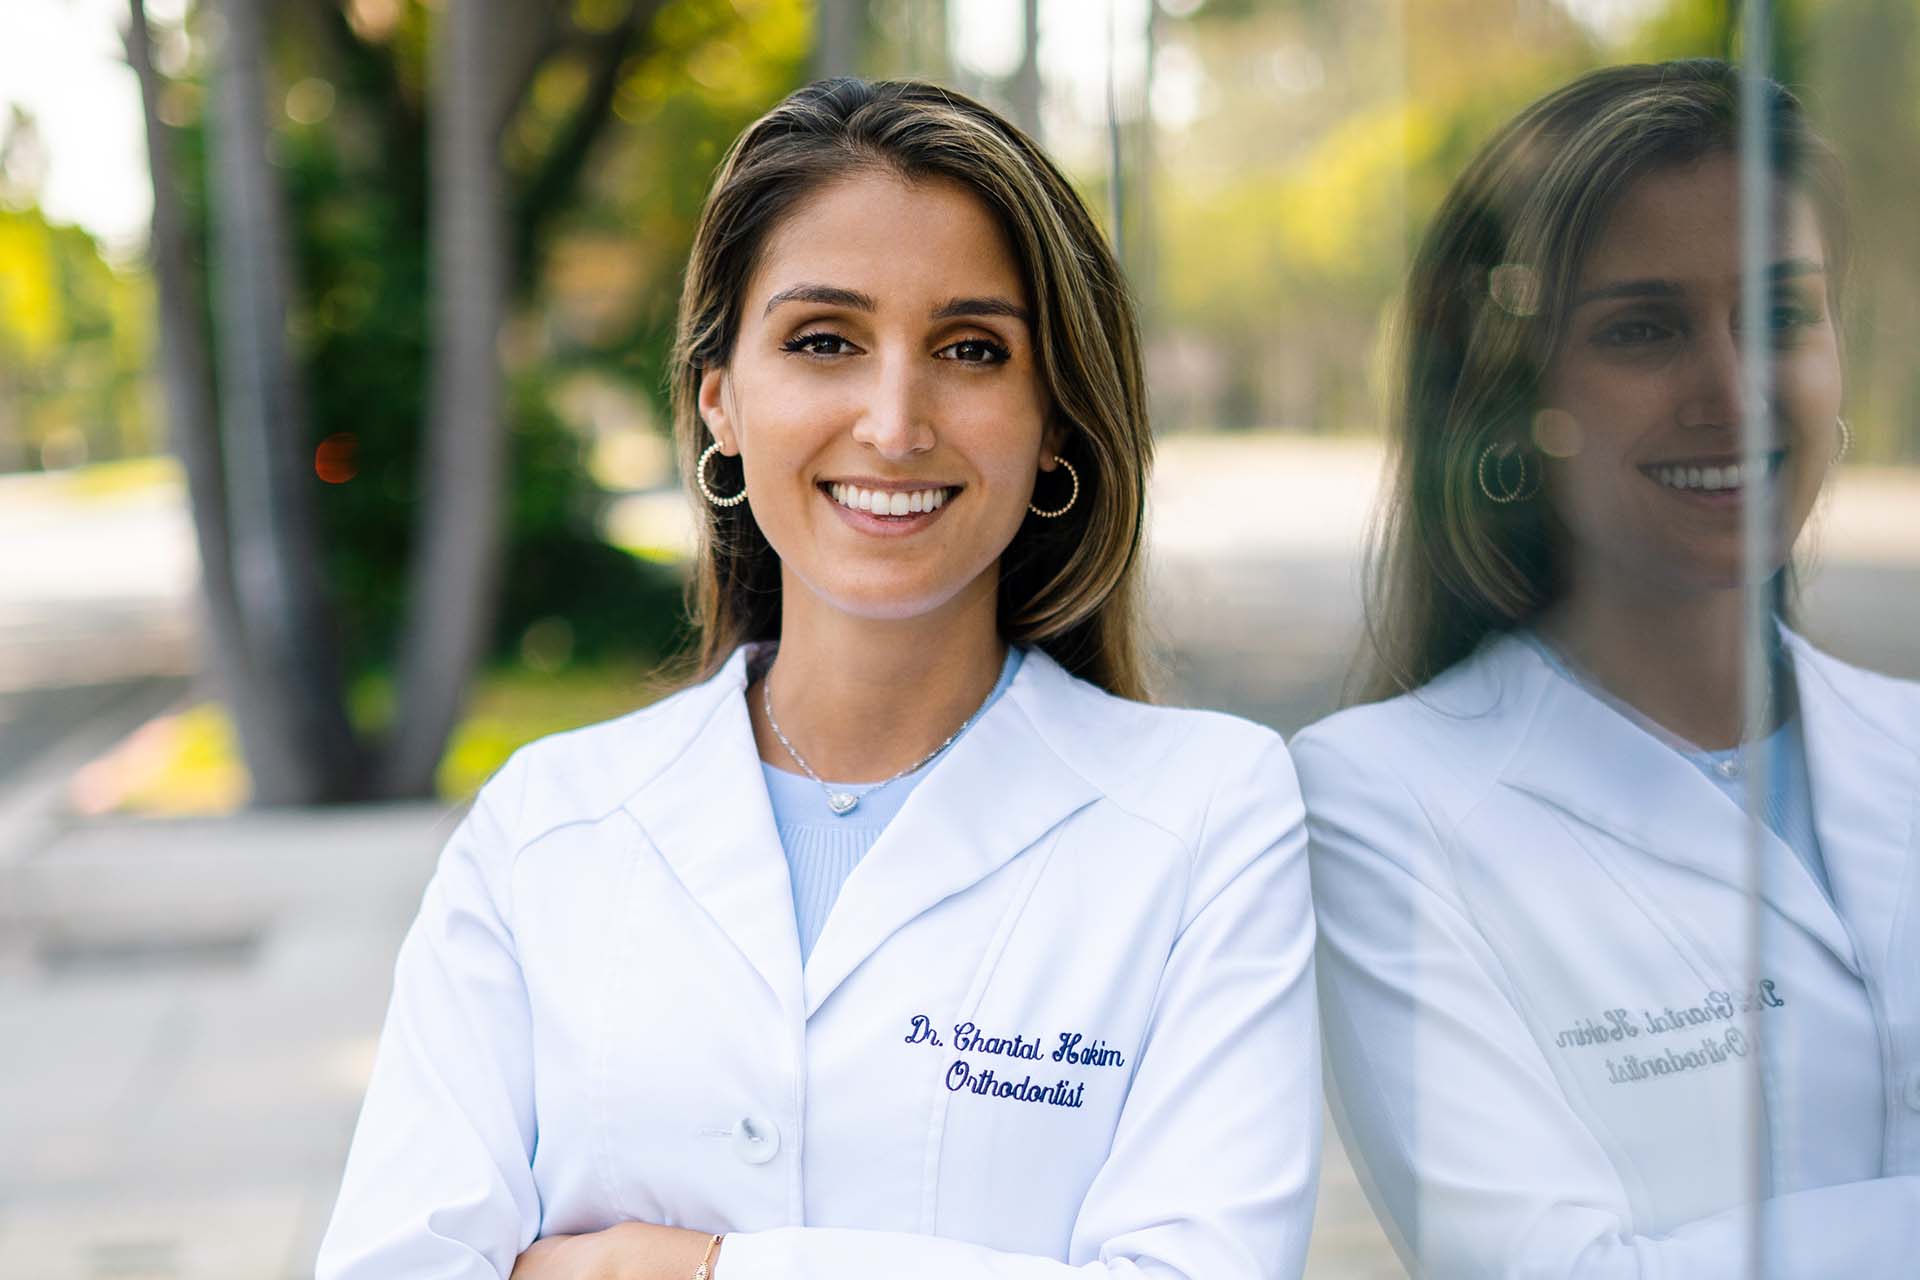 Dr Chantal Hakim of the Orthospaceship - Hakim Orthodontics serving San Fernando Valley